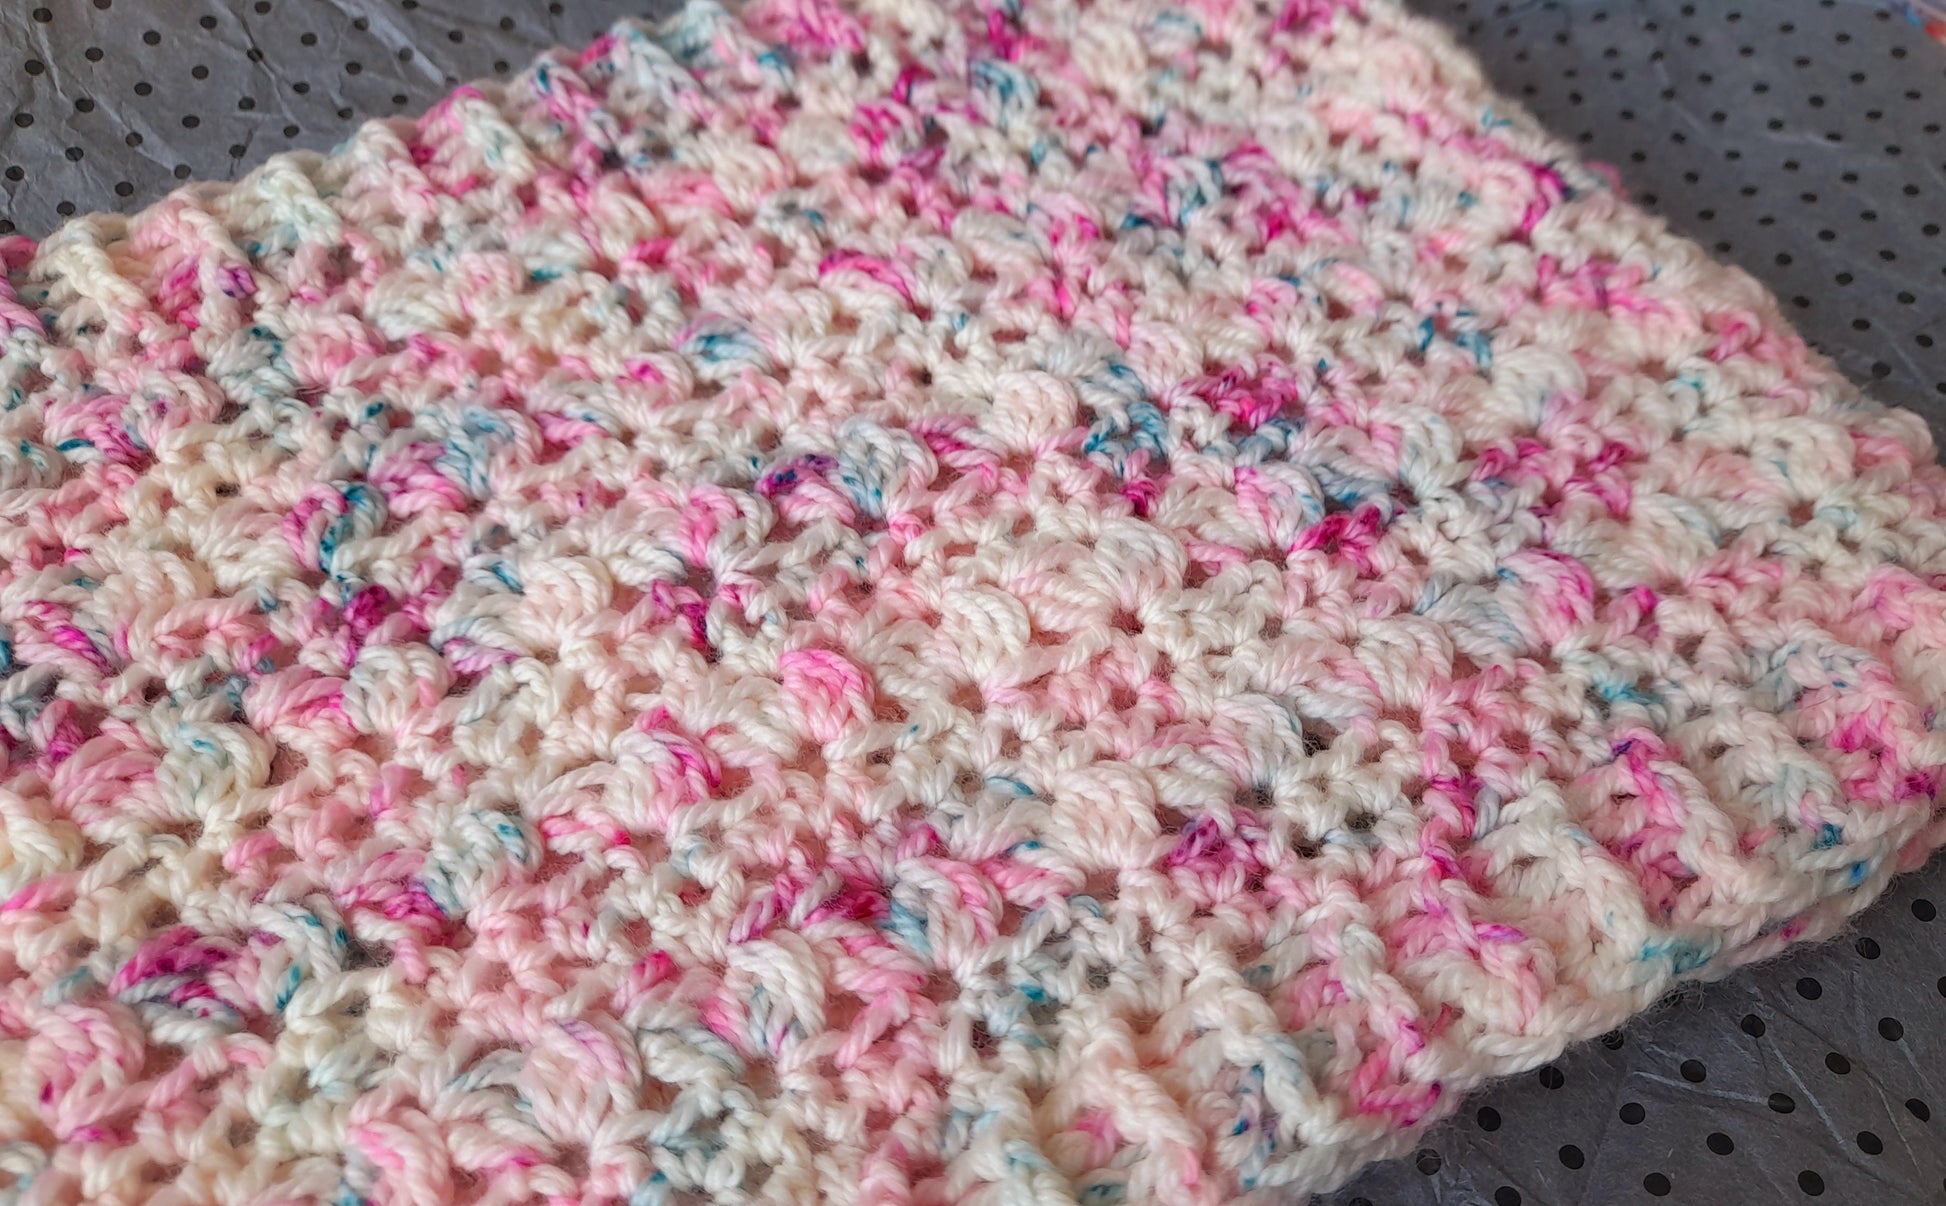 Textured crochet cowl using only one skein of DK yarn. Easy neckwarmer pattern